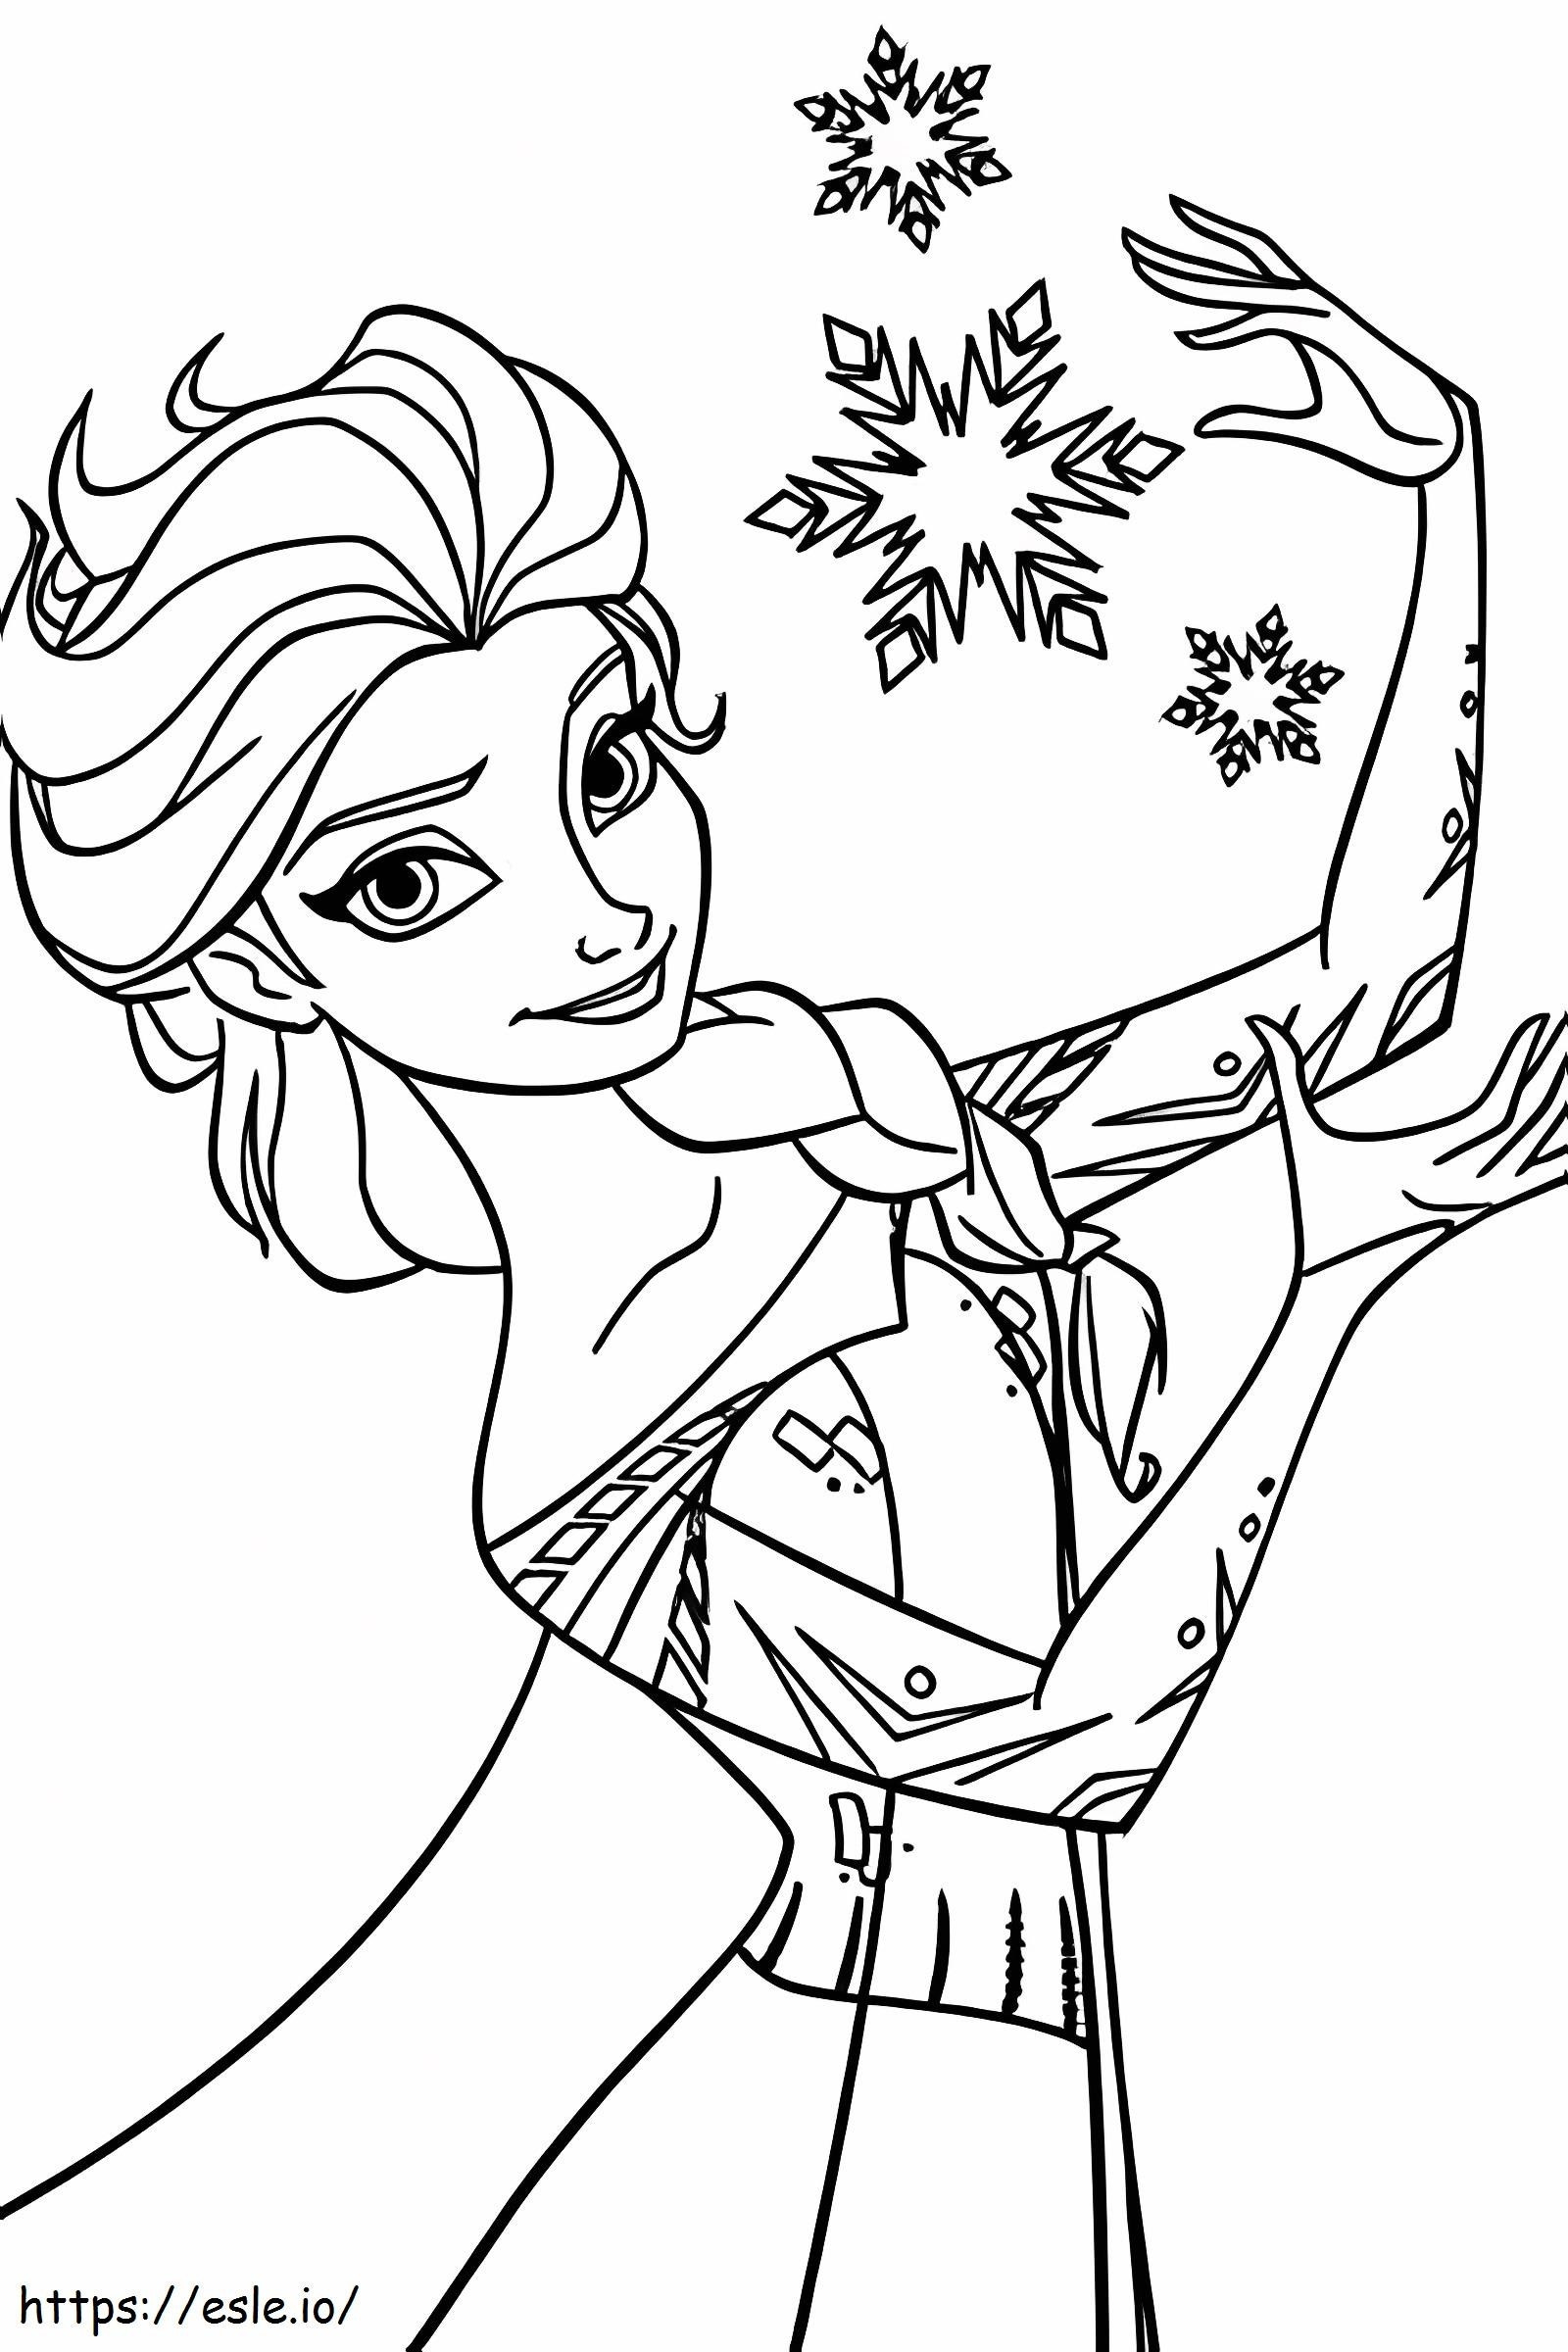 Cara da Elsa Disney para colorir